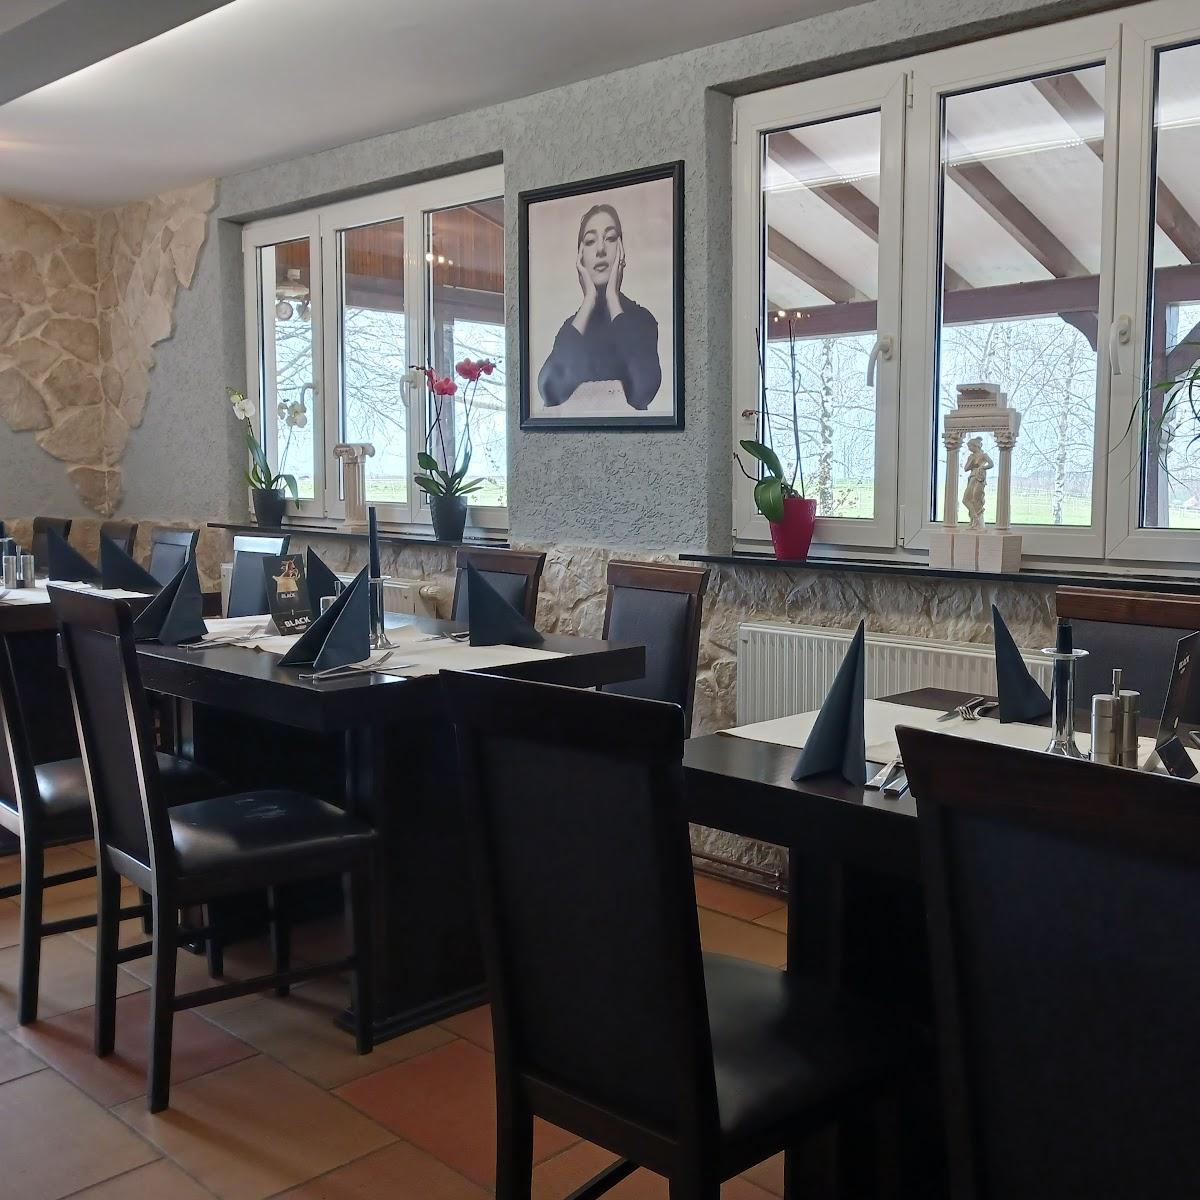 Restaurant "La Taverne" in Seebach